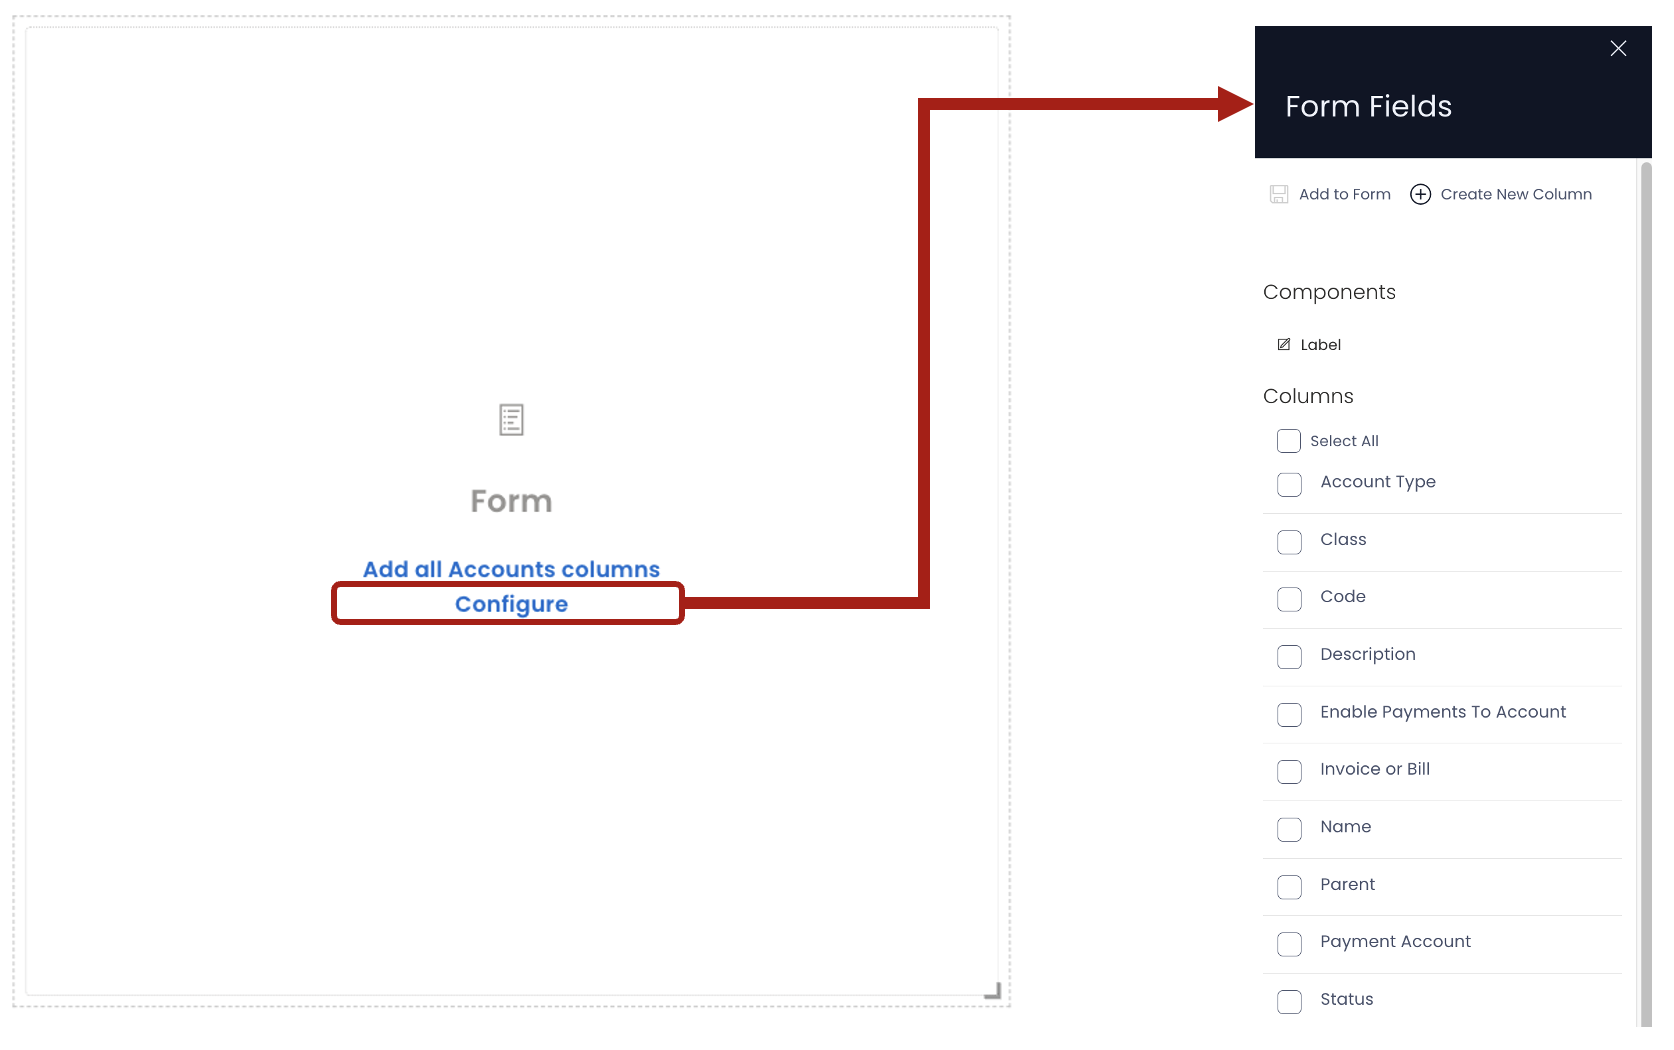 Configure a form lets you select fields